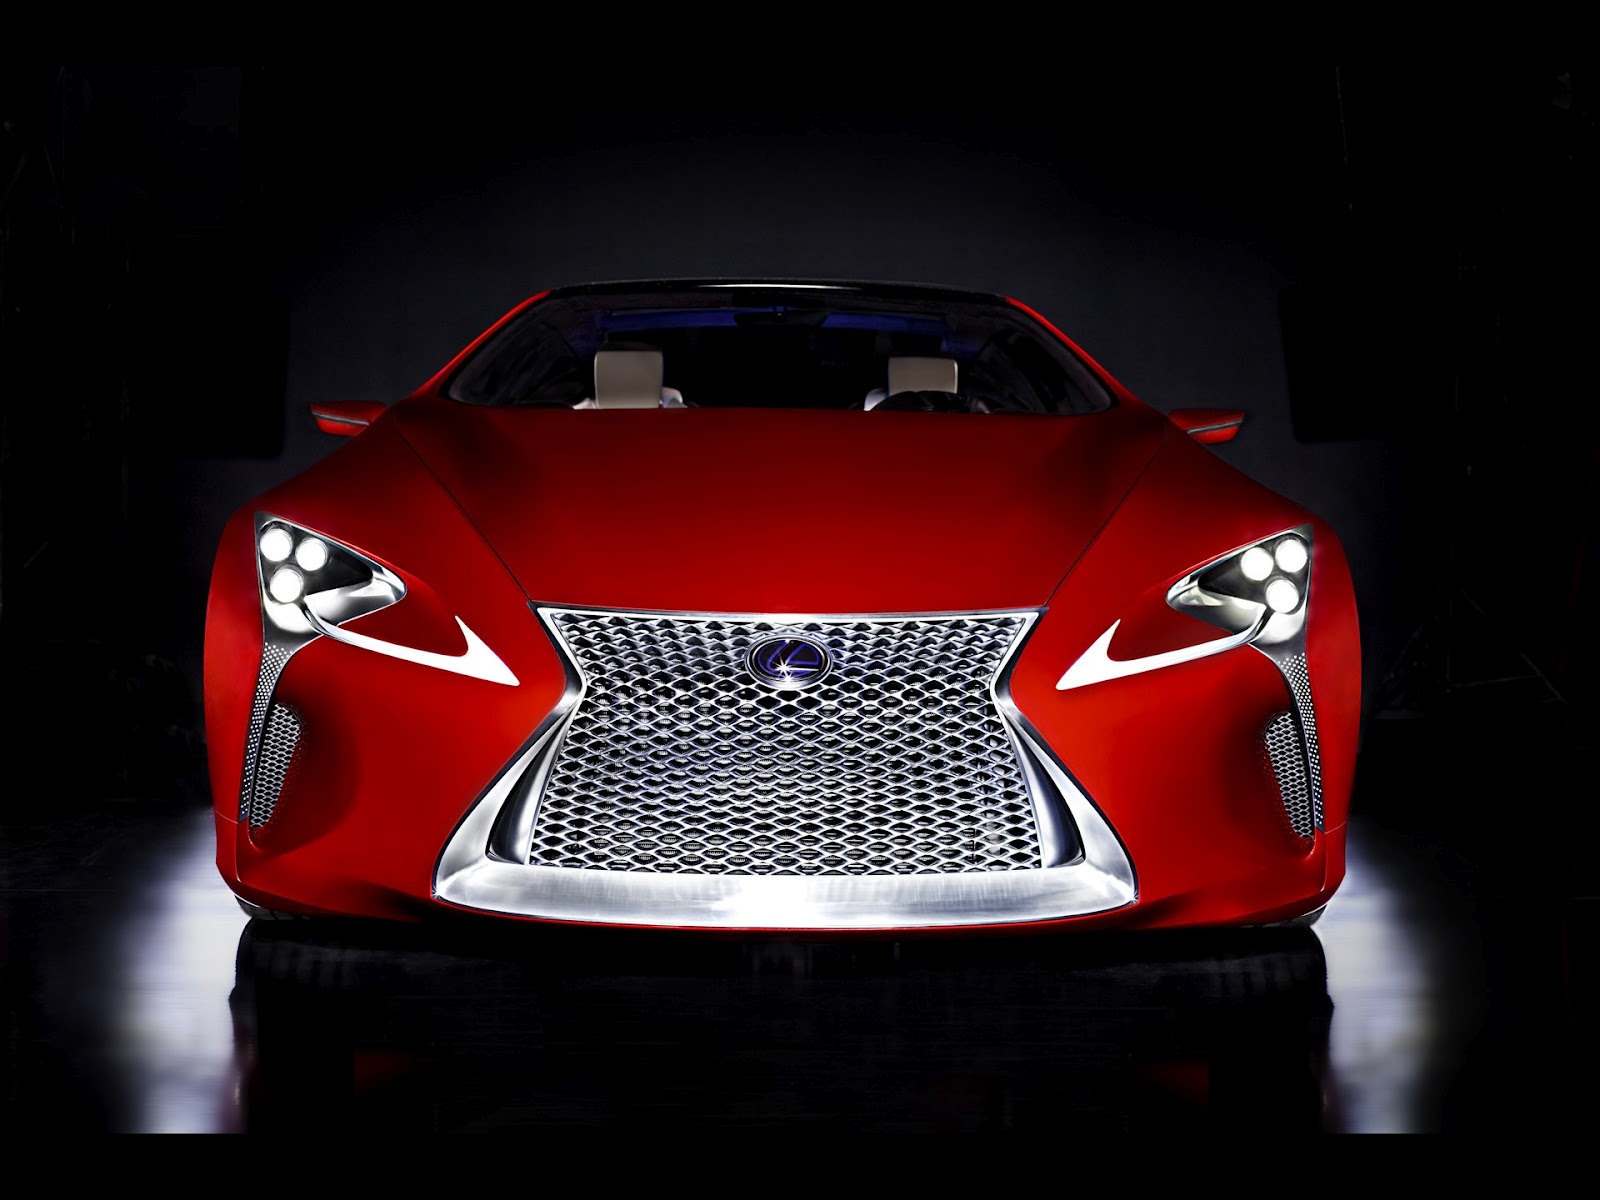 https://blogger.googleusercontent.com/img/b/R29vZ2xl/AVvXsEhcDy5dBGZu__imlj-Bew4E0QfW-VBSro9JDp4NlIjcX5Yyi4GlvPYyL4AD3hDZ4J4AXSI72fOqNCP0UiRtEKgJb9OSzKAgWc69VBYPF2PYR6IBtglRuidqSBLPC21FuxrGsIJrclcRec4/s1600/Lexus_2012_Concept_Hybrit_Car_Studio_Front_View_HD_Wallpaper.jpg